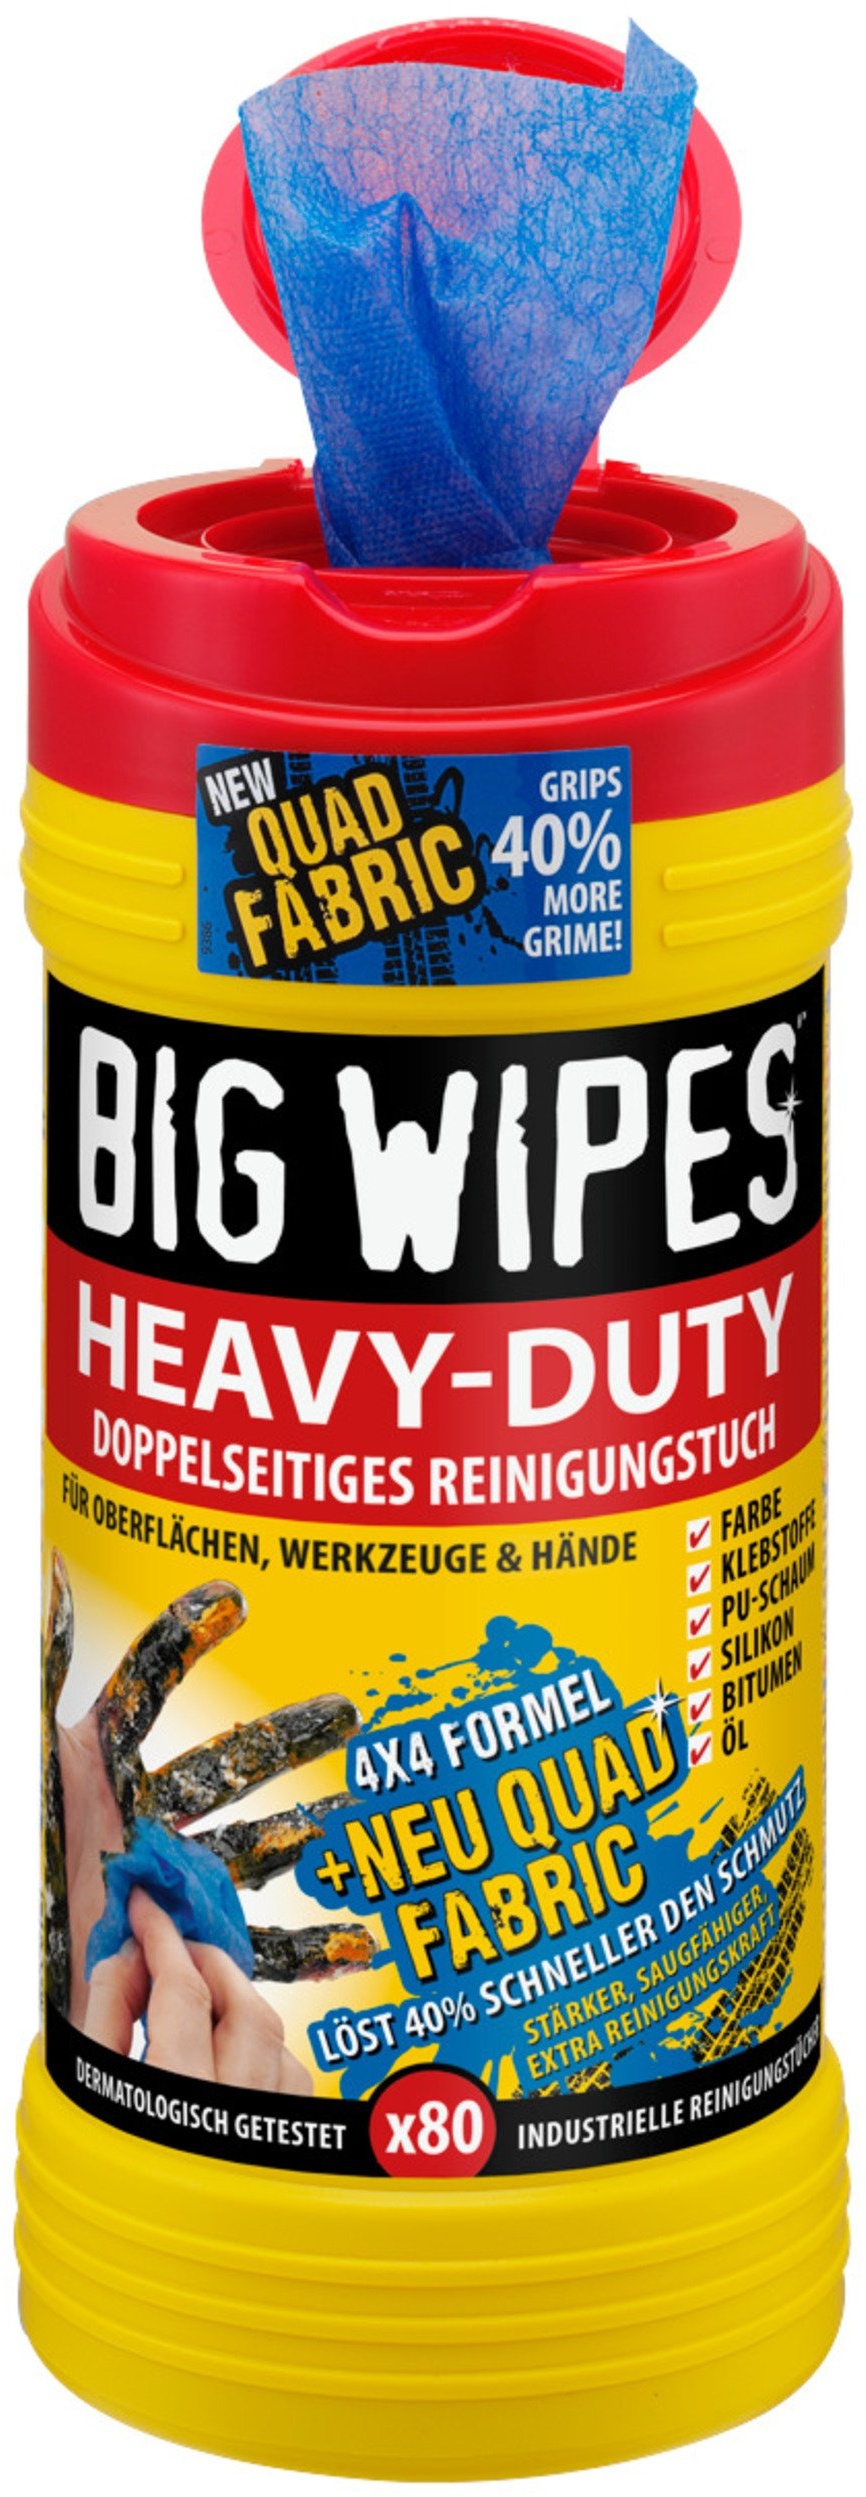 Big Wipes Reinigungstücher Heavy-Duty